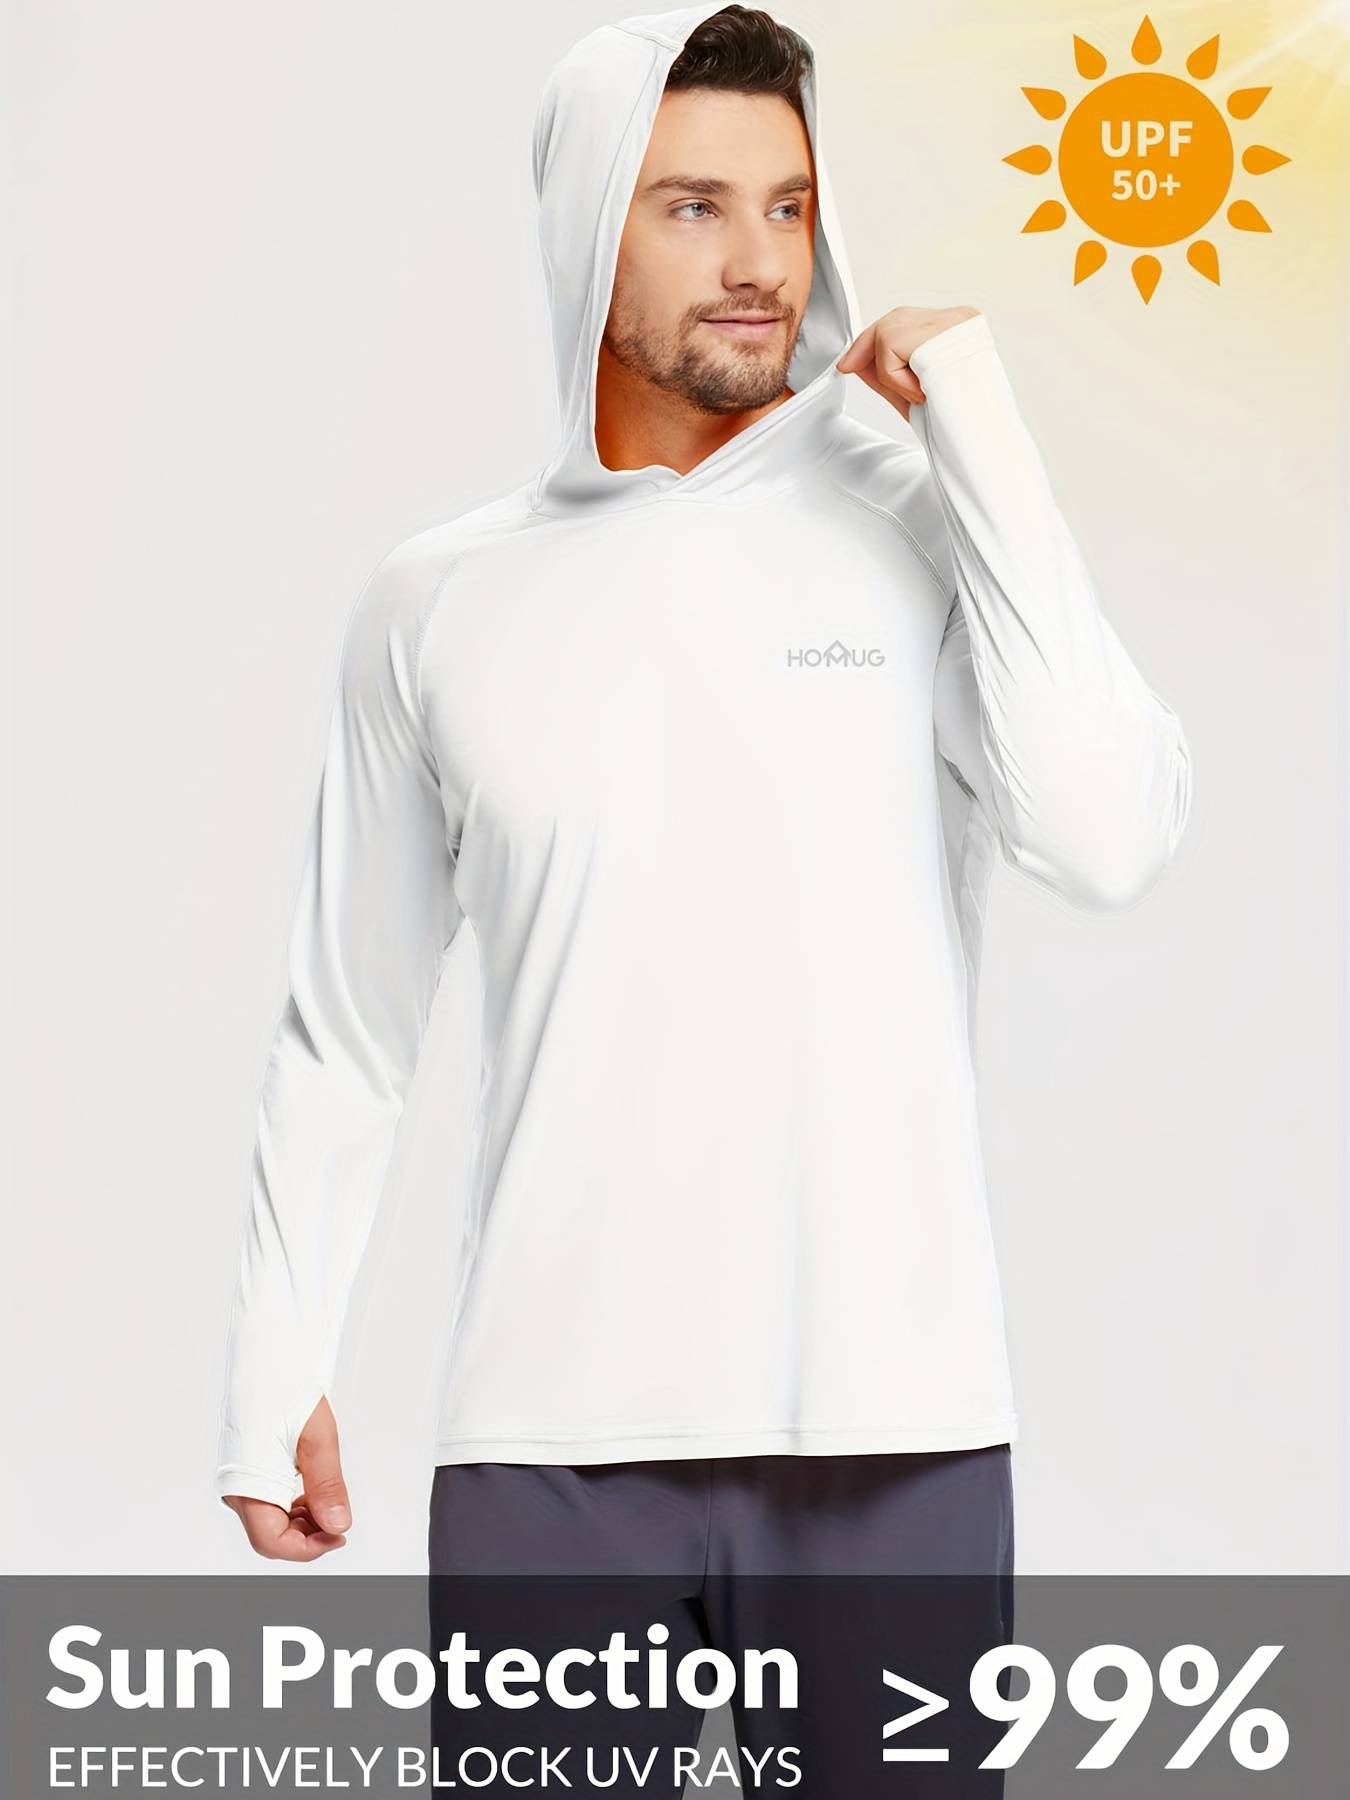 Weligu Men's UPF 50+ Sun Protection Hoodie Shirt Long Sleeve SPF Fishing Outdoor UV Hiking Shirts Lightweight White X-Large